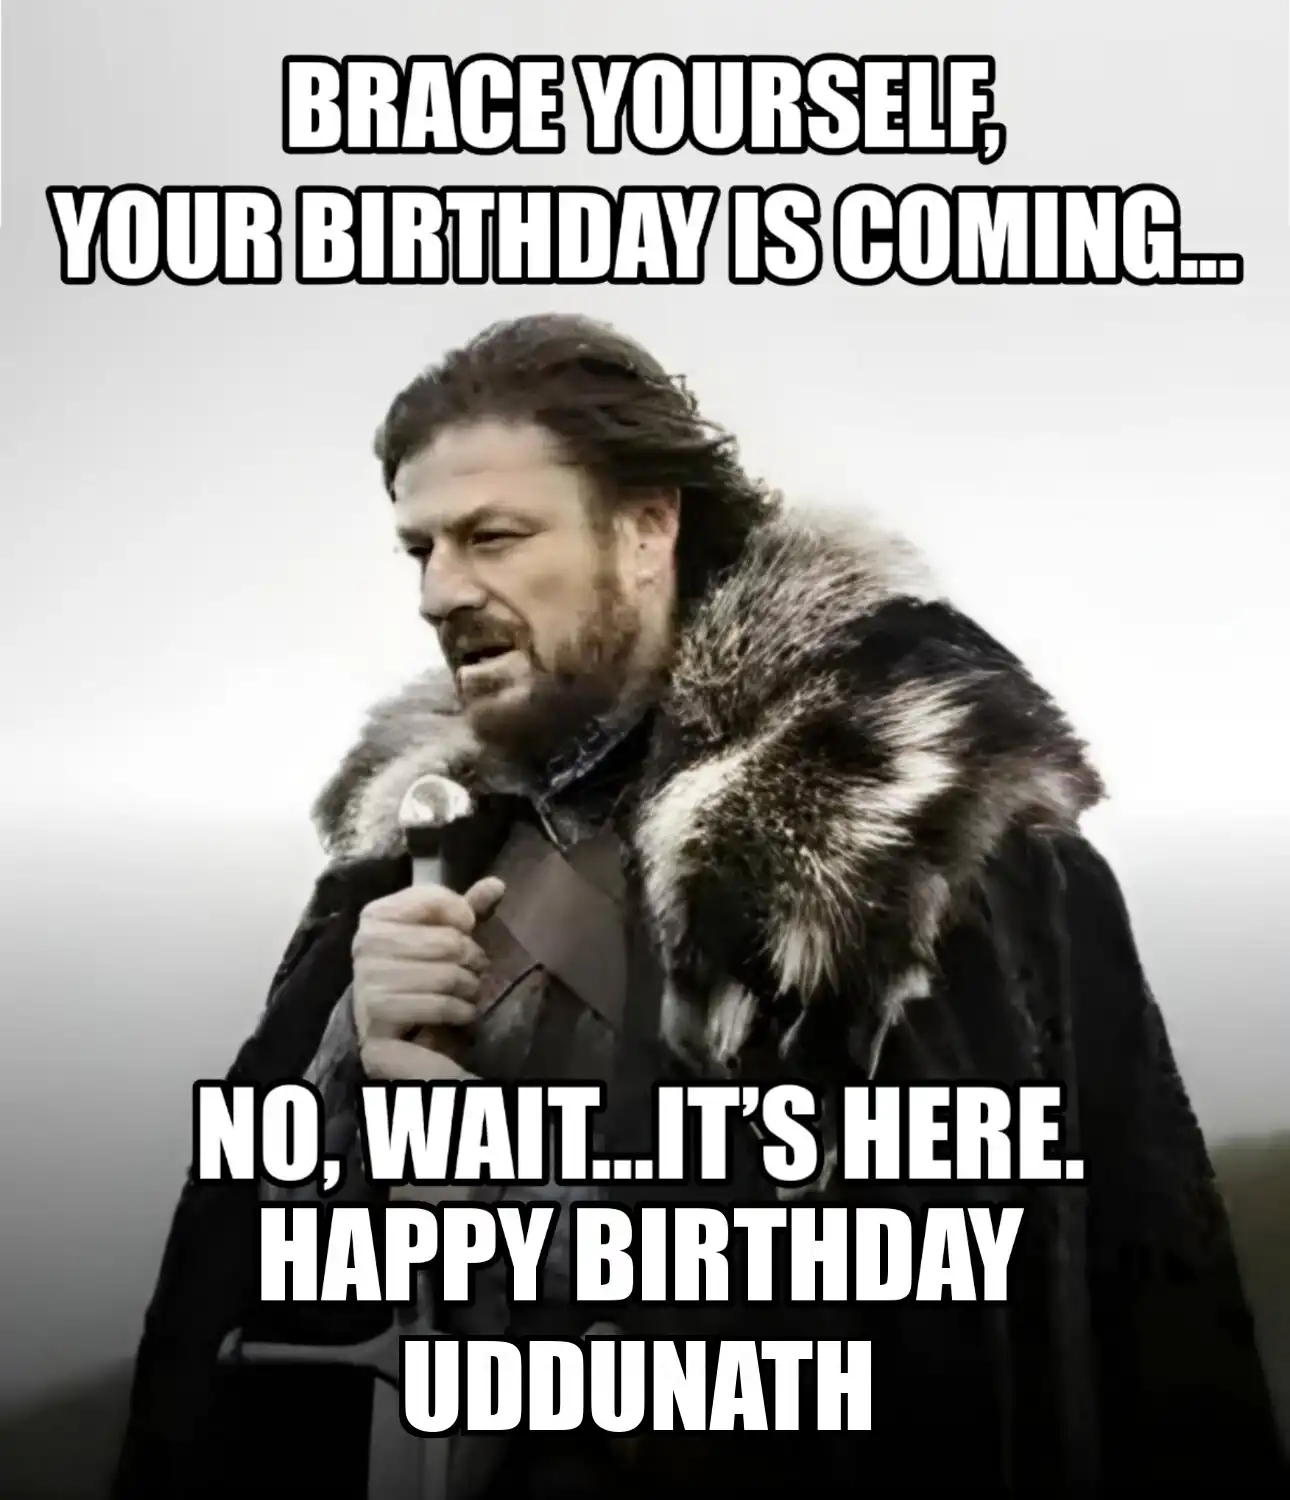 Happy Birthday Uddunath Brace Yourself Your Birthday Is Coming Meme